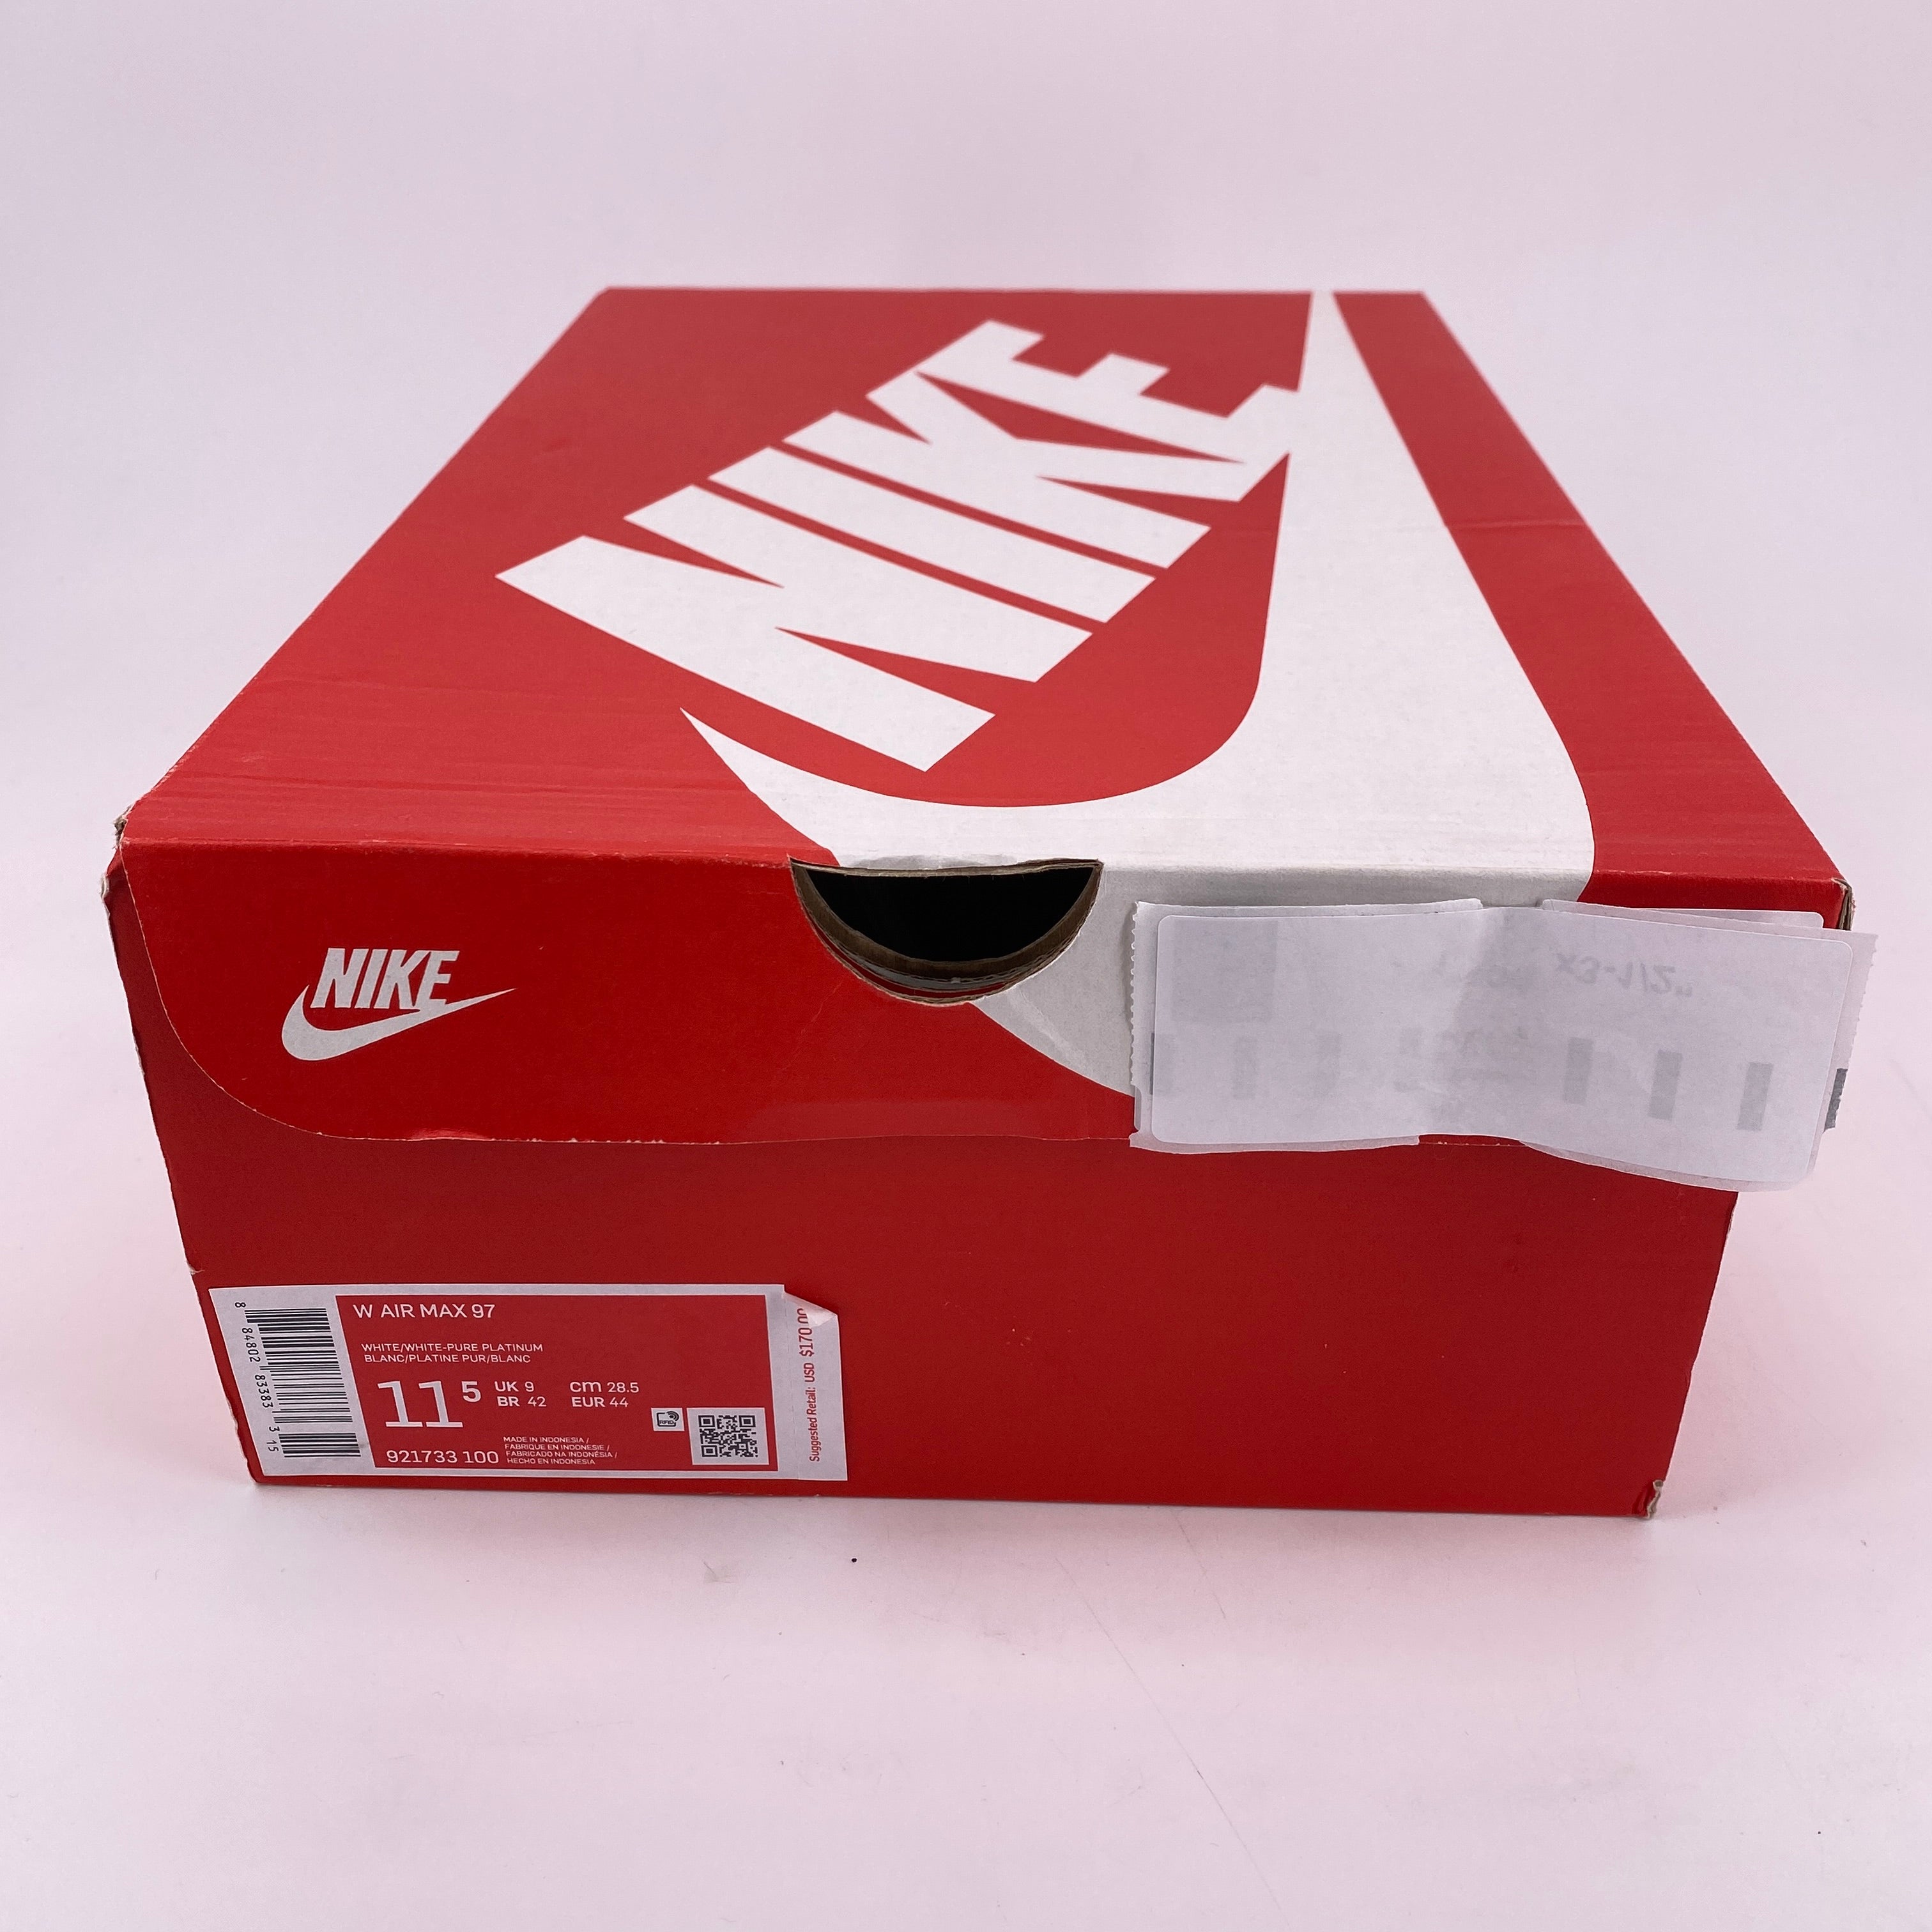 Nike (W) Air Max 97 "Pure Platinum" 2018 New Size 11.5W